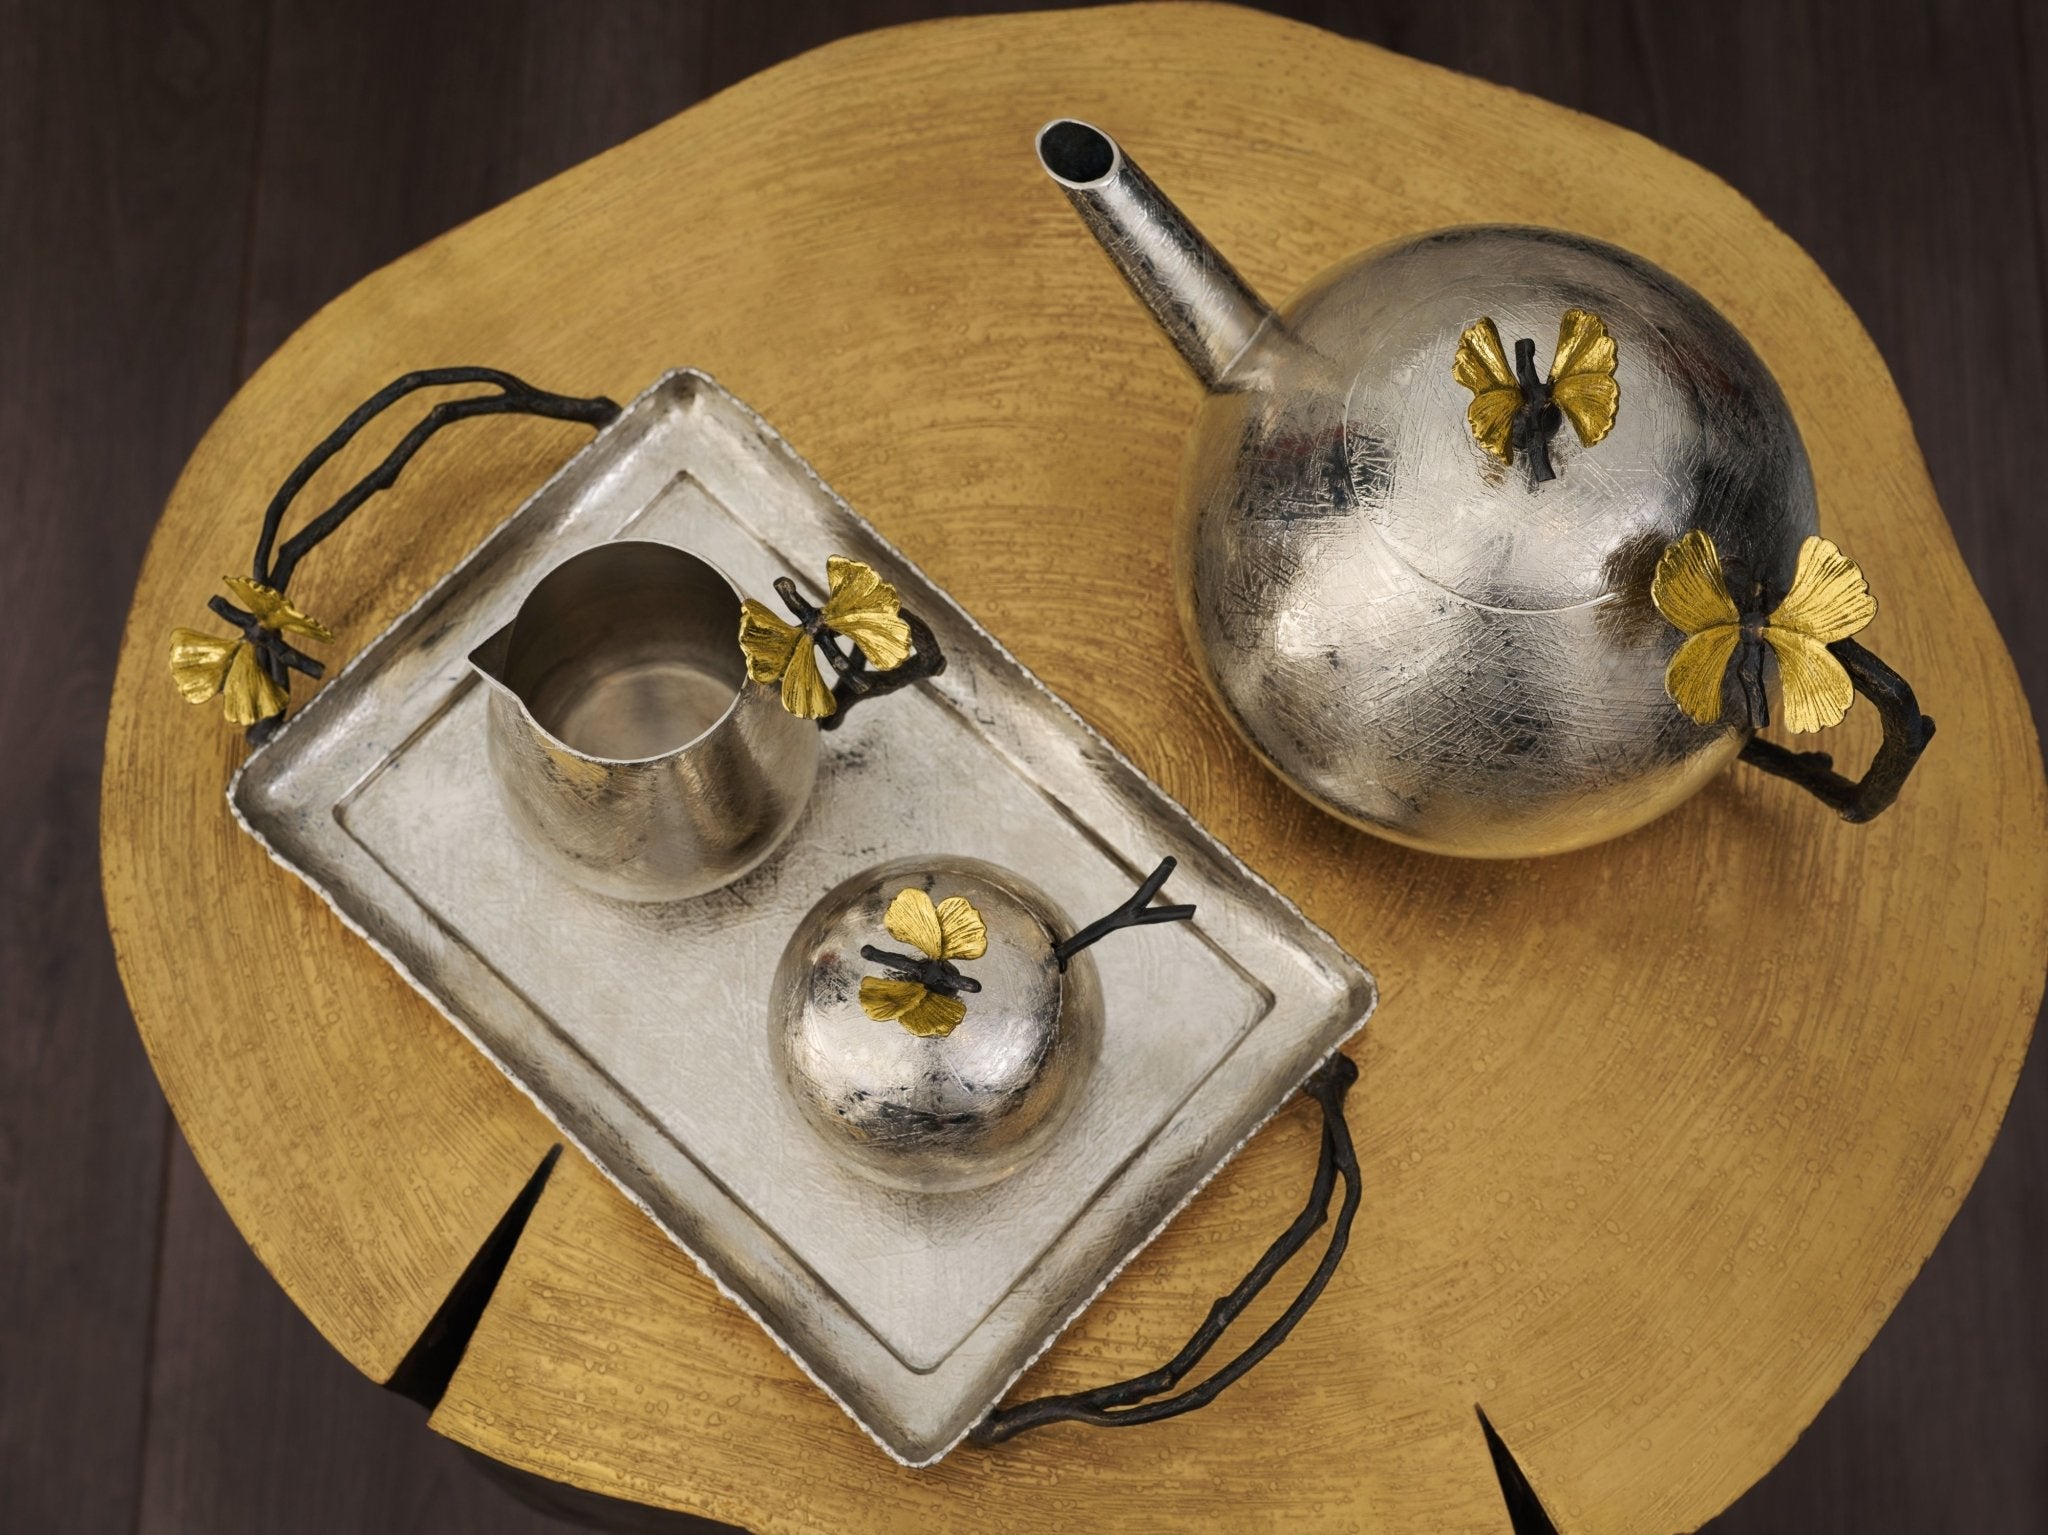 Michael Aram Butterfly Ginkgo Round Teapot